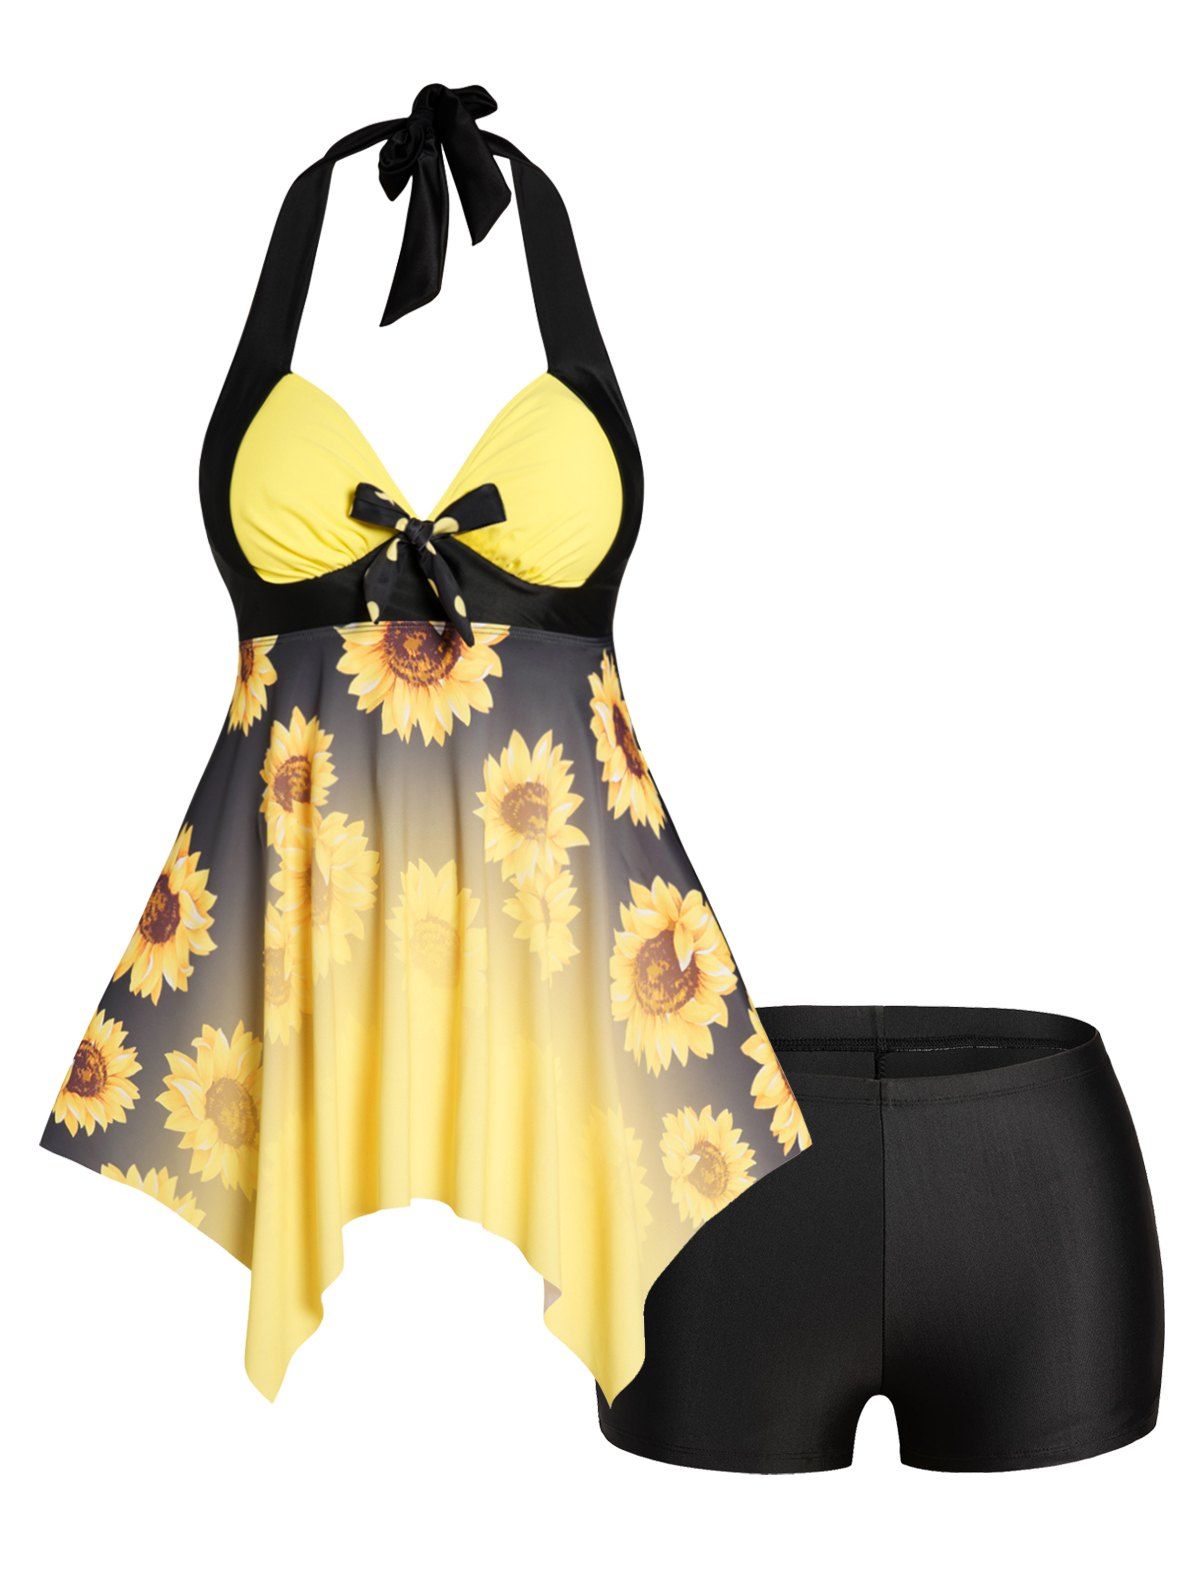 Plus Size Tankini Swimsuit Sunflower Print Halter Vacation Modest Swimsuit Padded Boyleg Bathing Suit - YELLOW L